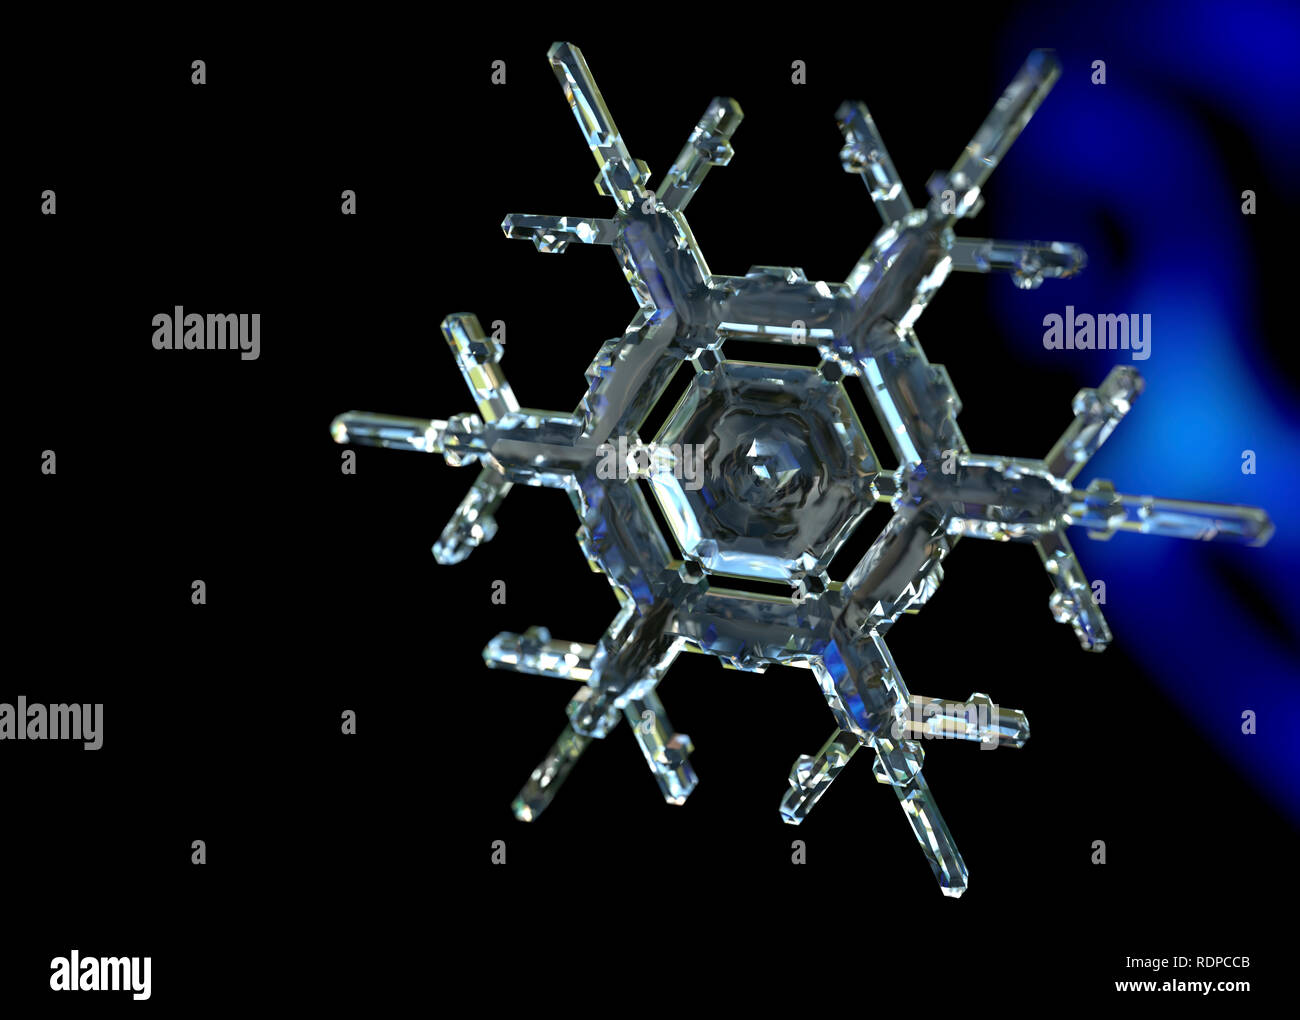 Snowflake against a dark background, illustration. Stock Photo